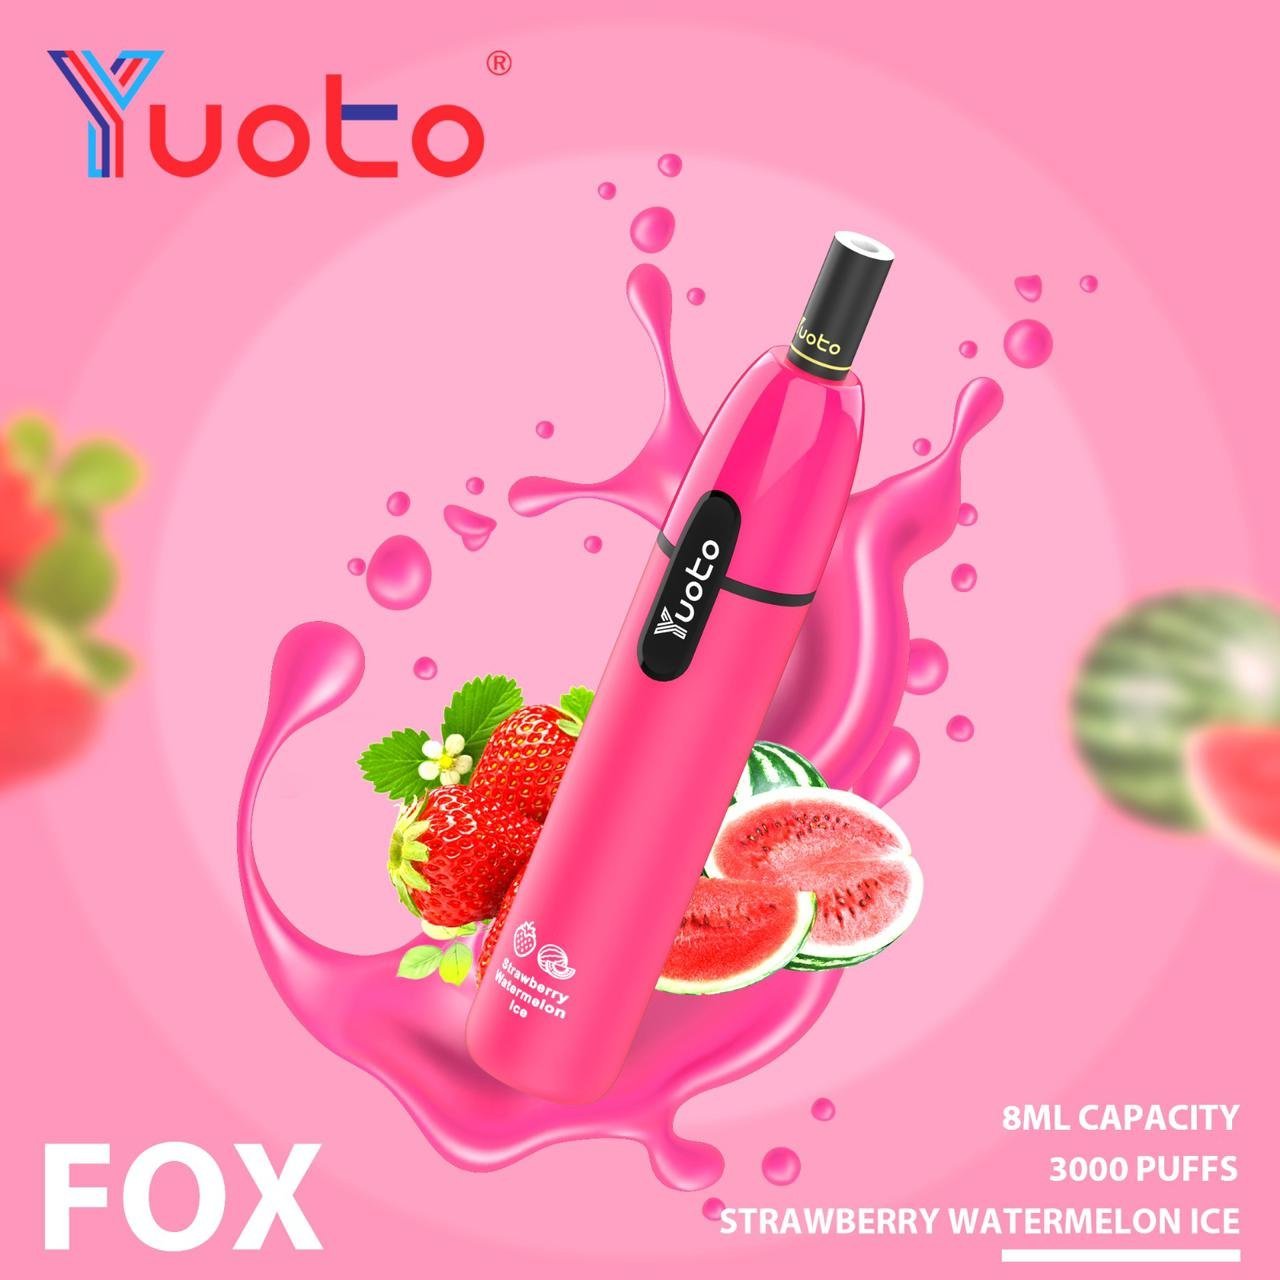 Yuoto Fox 3000 Puffs Disposable Vape